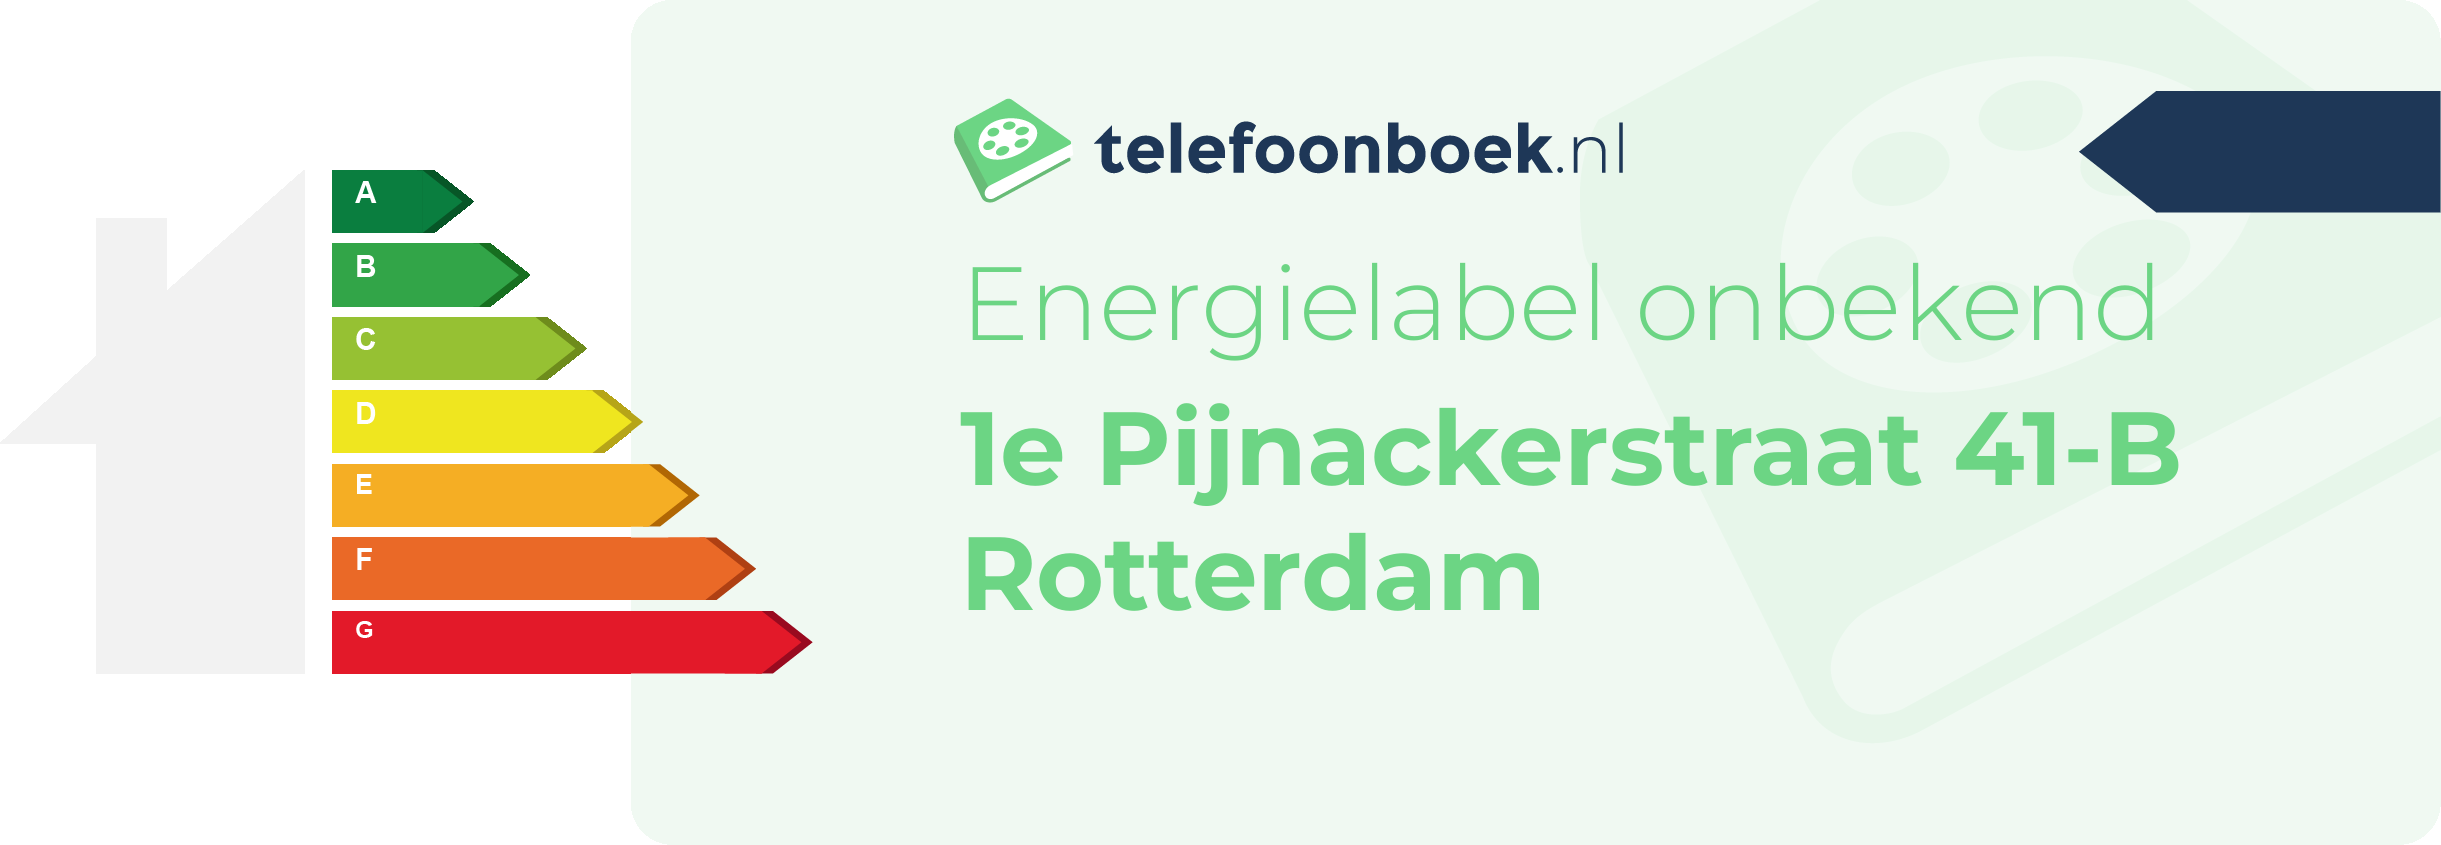 Energielabel 1e Pijnackerstraat 41-B Rotterdam